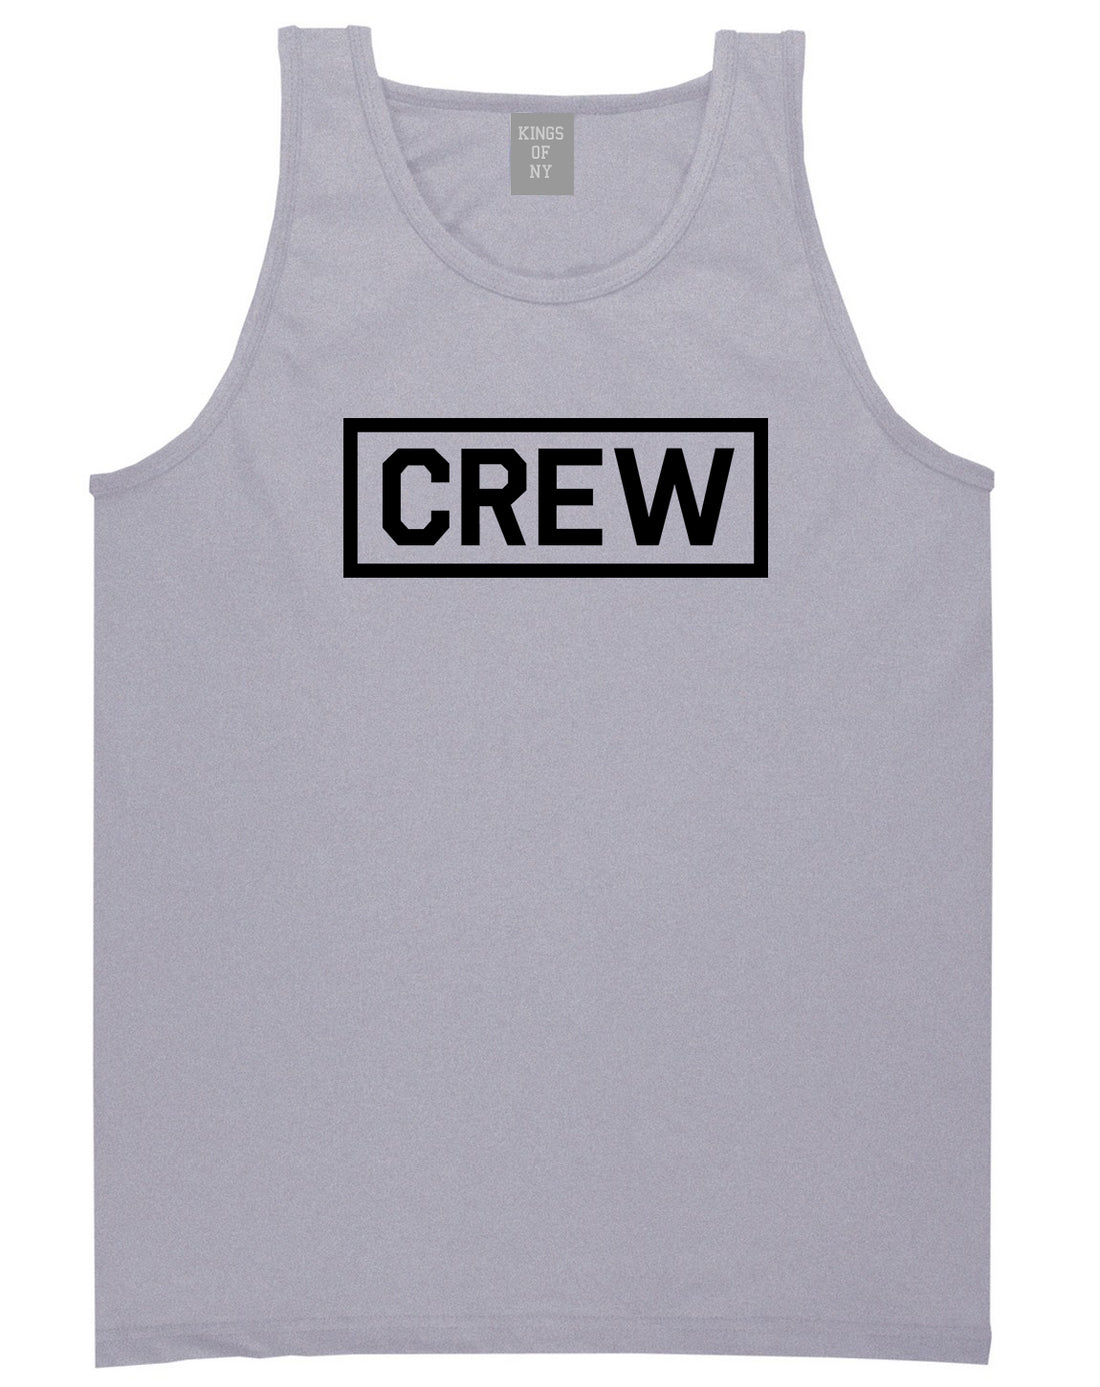 Crew Box Film Movie Mens Grey Tank Top Shirt by KINGS OF NY